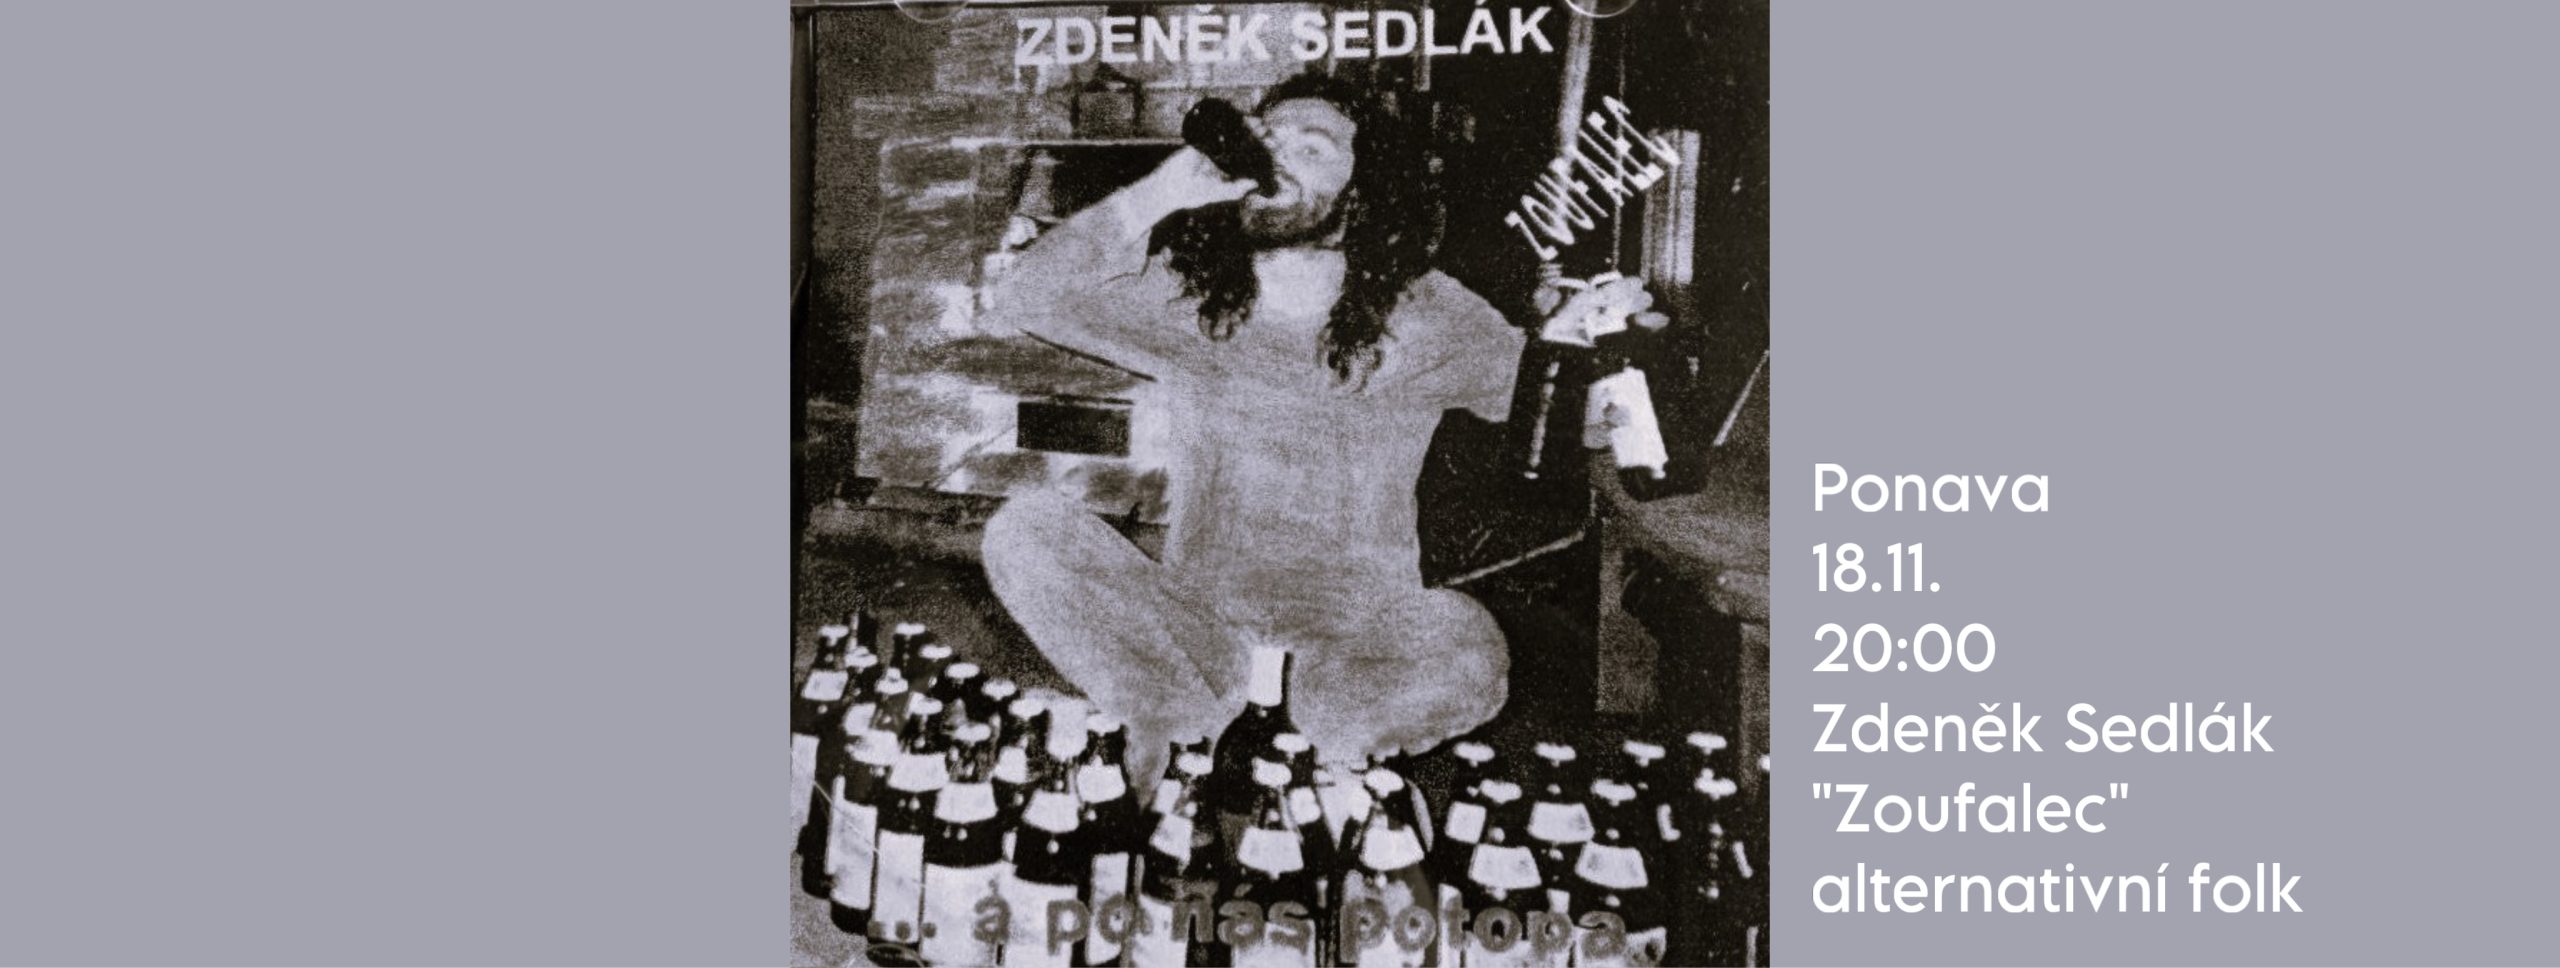 Zdeněk "Zoufalec" Sedlák